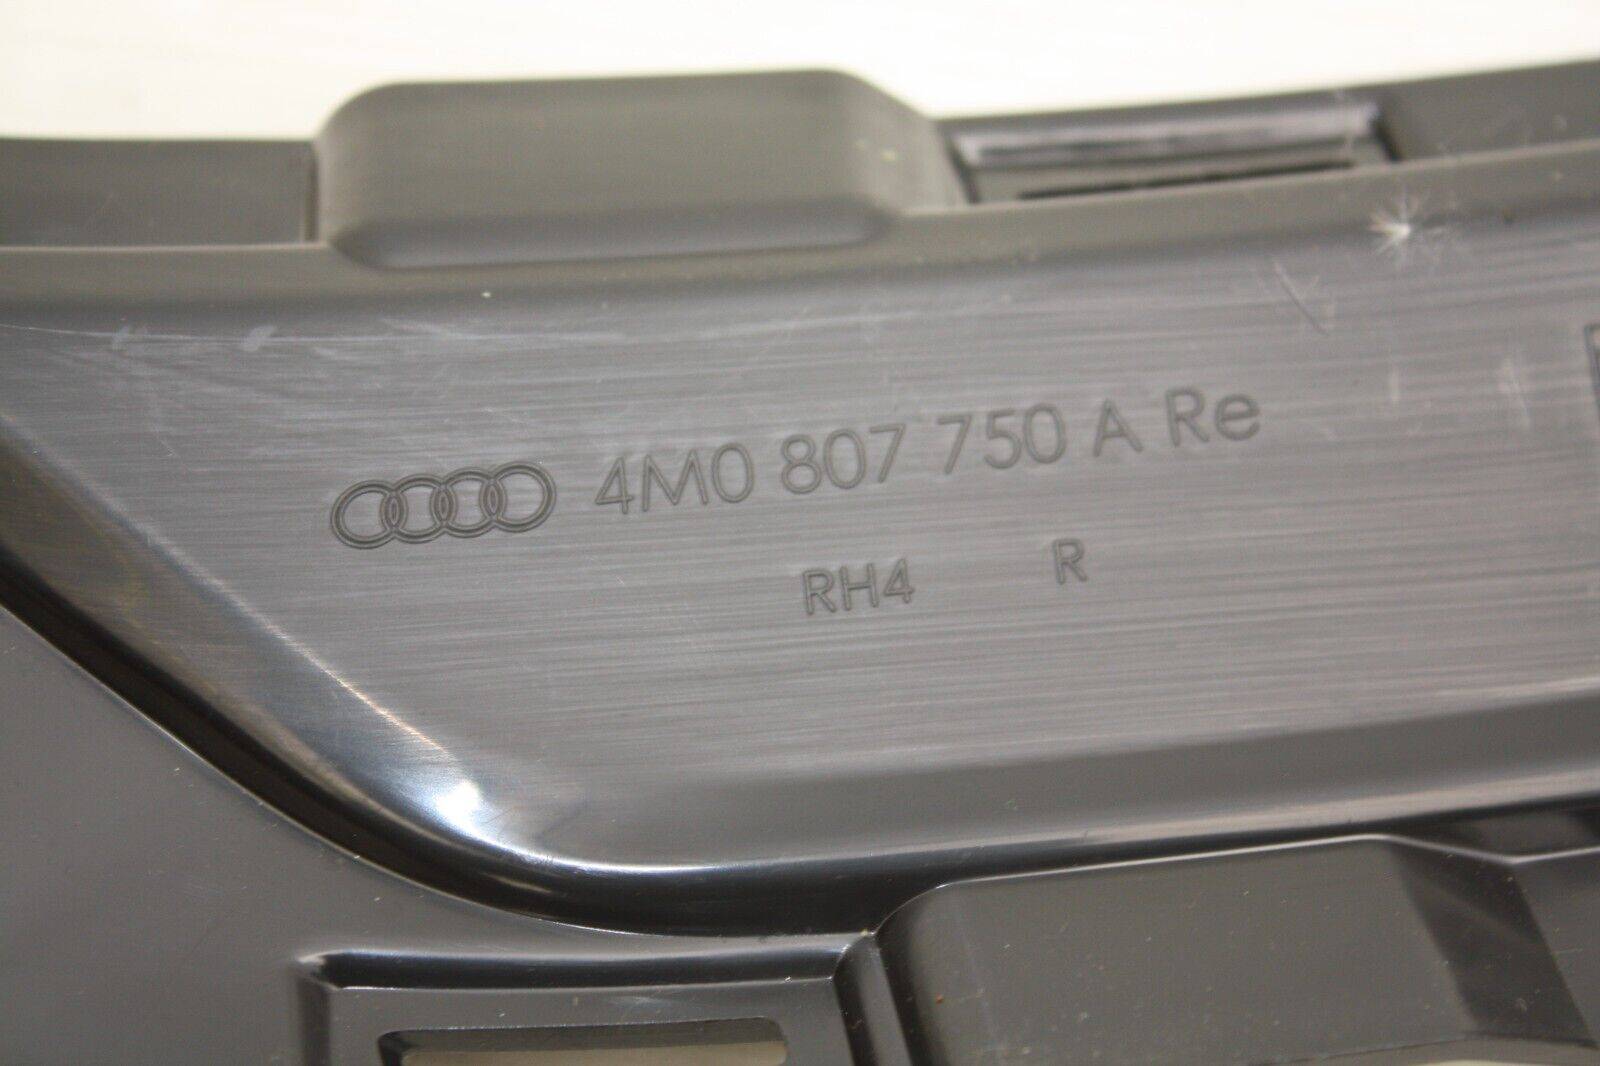 Audi-Q7-Front-Right-End-Cap-Cover-4M0807750A-Genuine-175739032727-7